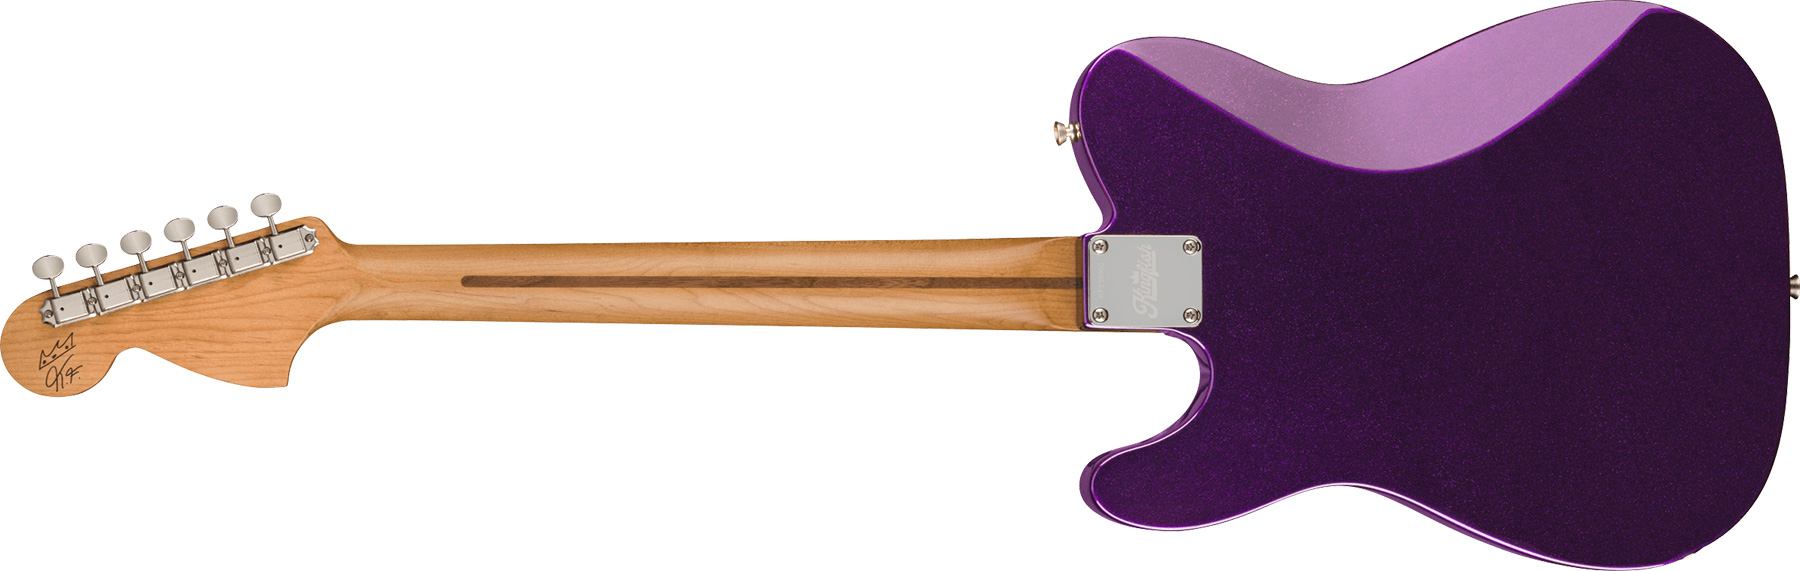 Fender Kingfish Tele Deluxe Usa Signature Hh Ht Rw - Mississippi Night - Tel shape electric guitar - Variation 1